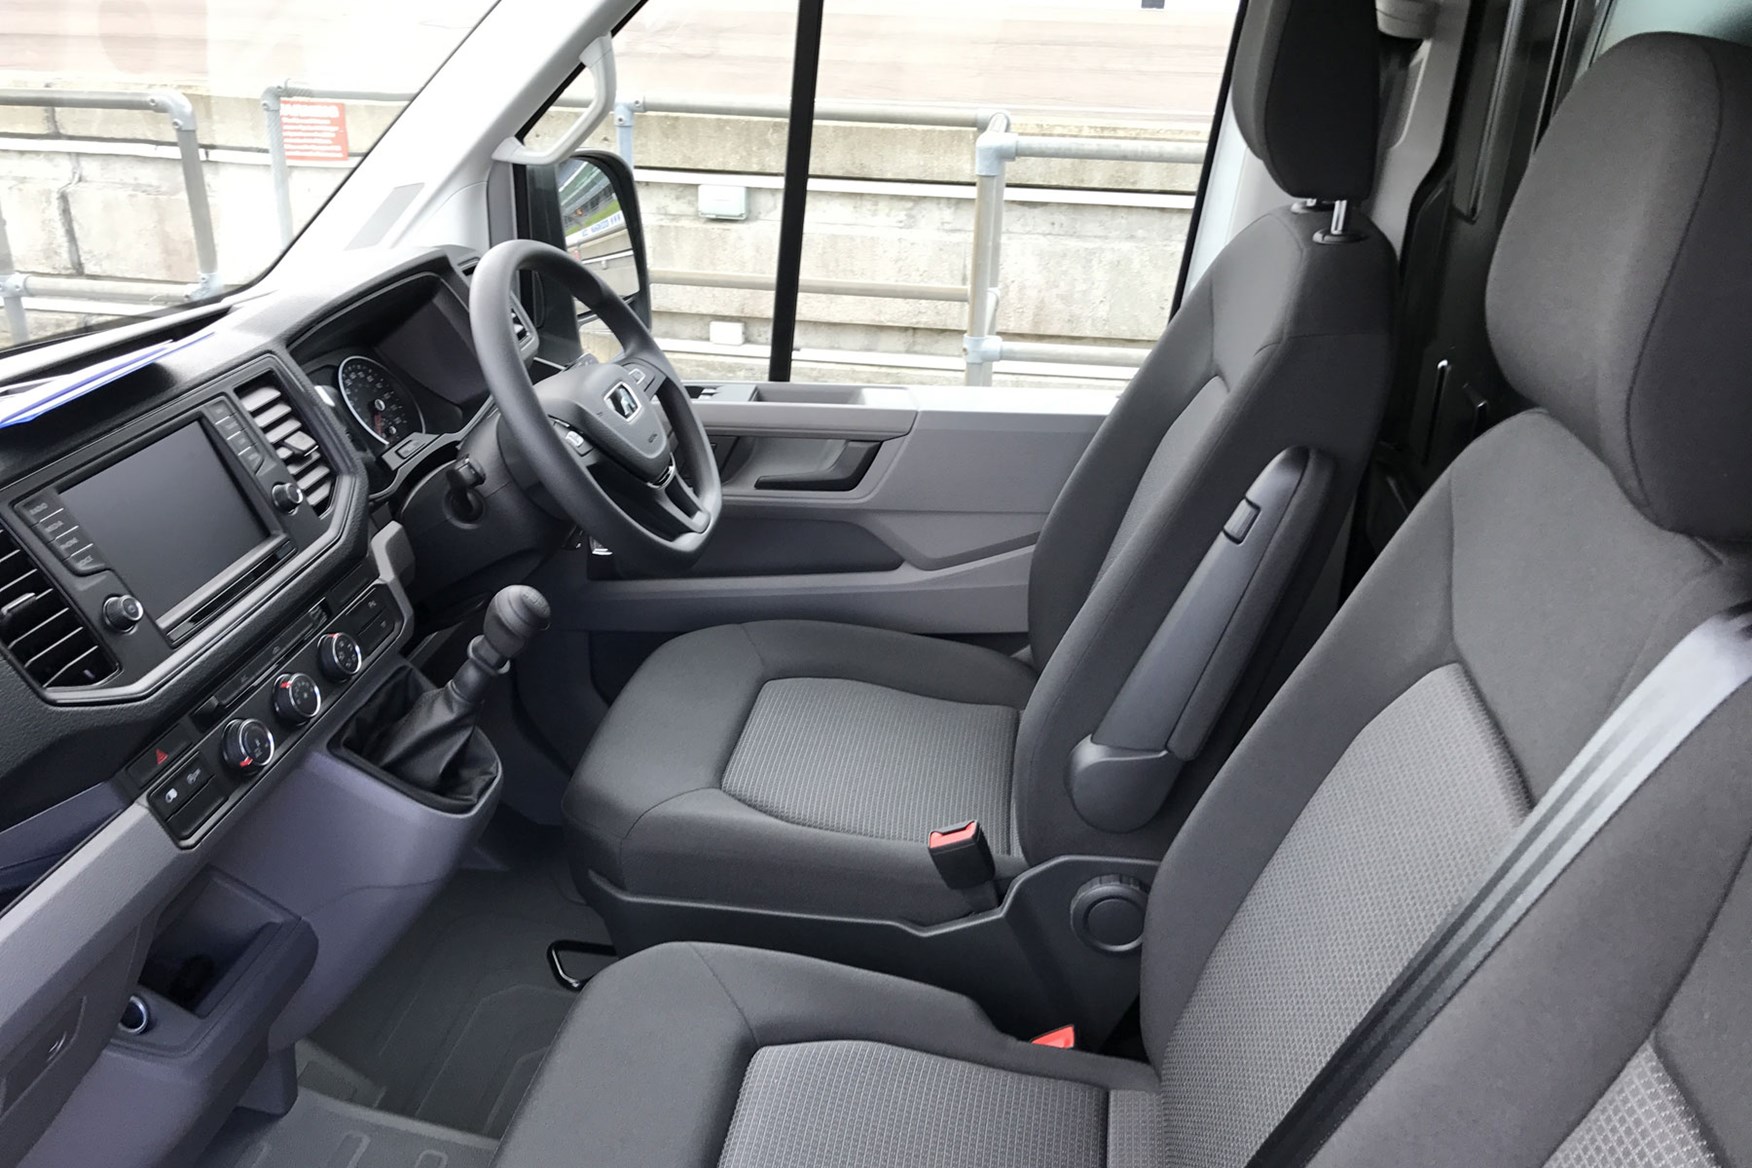 MAN TGE (2017-on), cab interior, comfort driver's seat